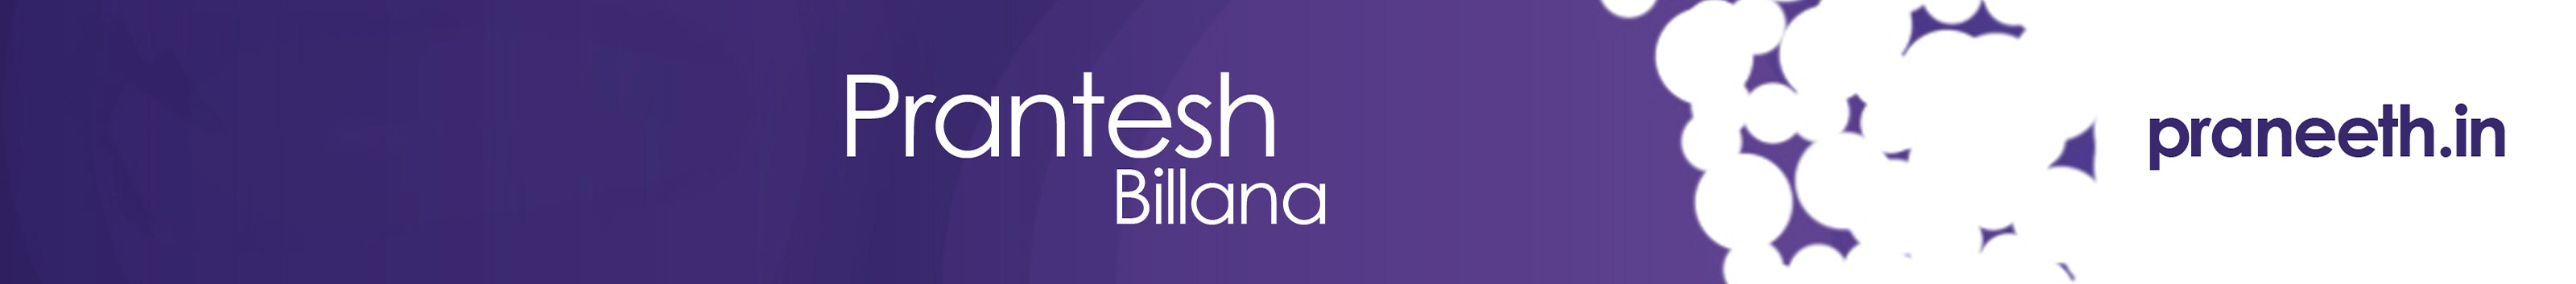 Prantesh Billana's profile banner